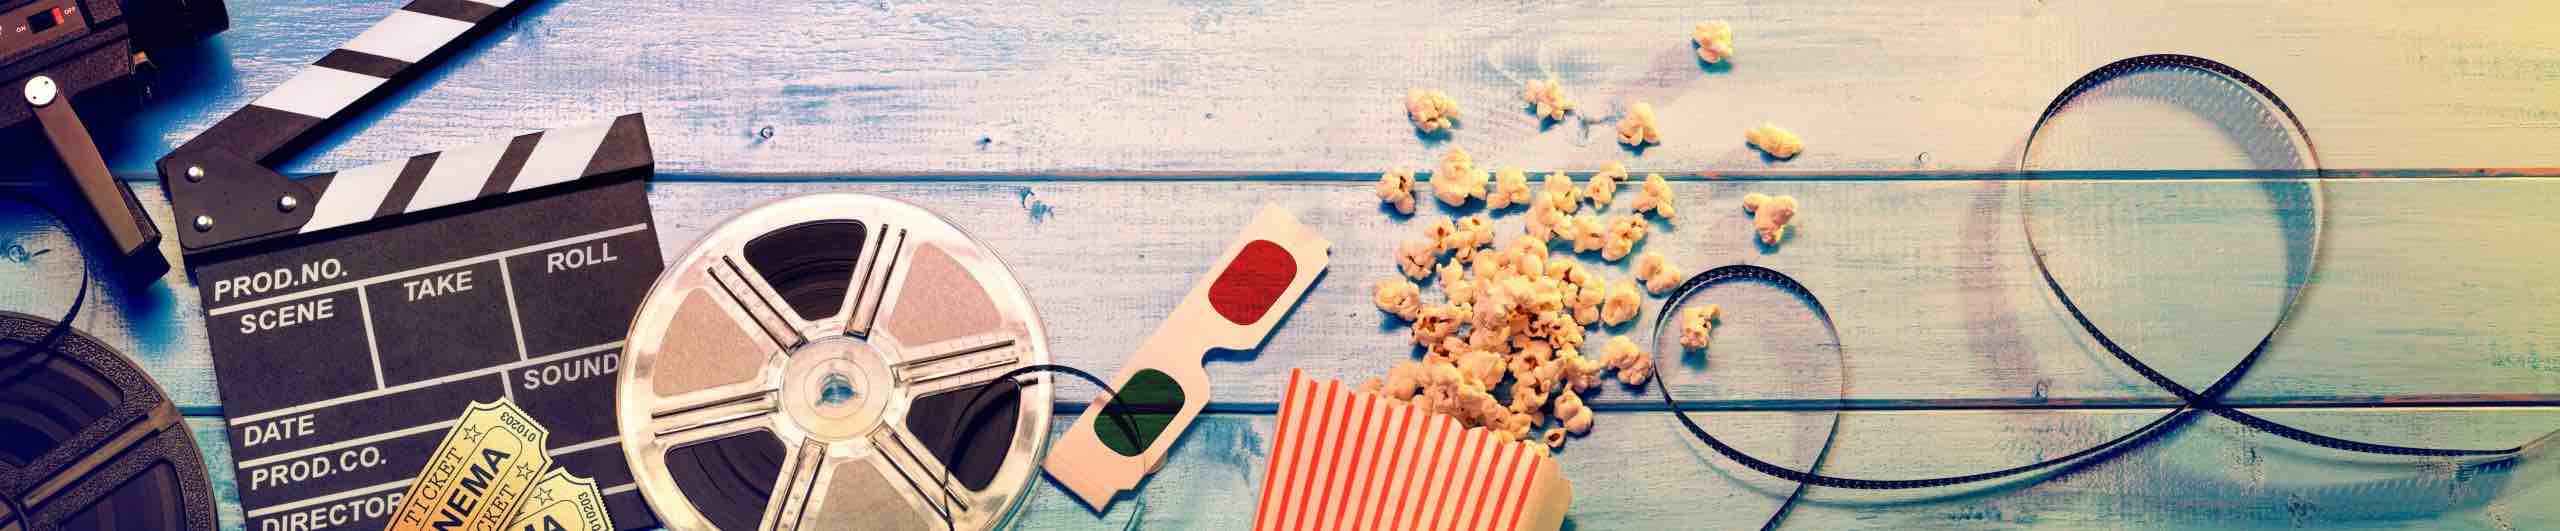 Movie reel, popcorn and movie items spread on the floor